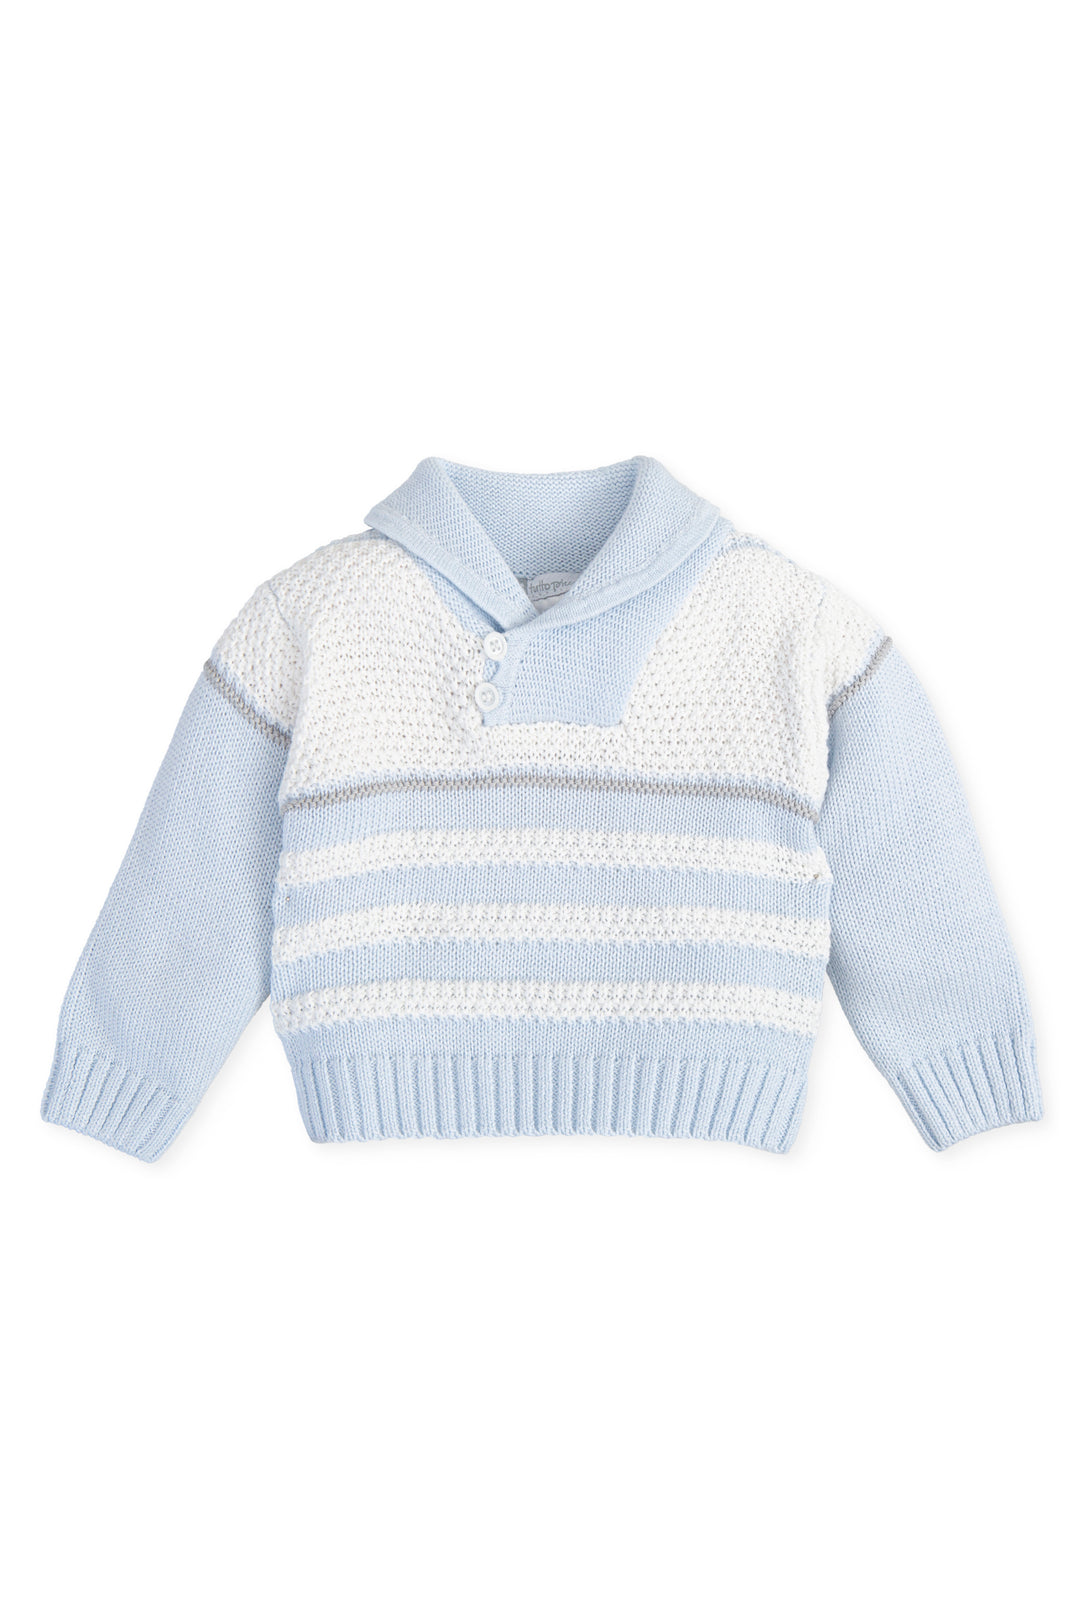 Tutto Piccolo "Alexander" Blue & White Striped Knit Jumper | Millie and John